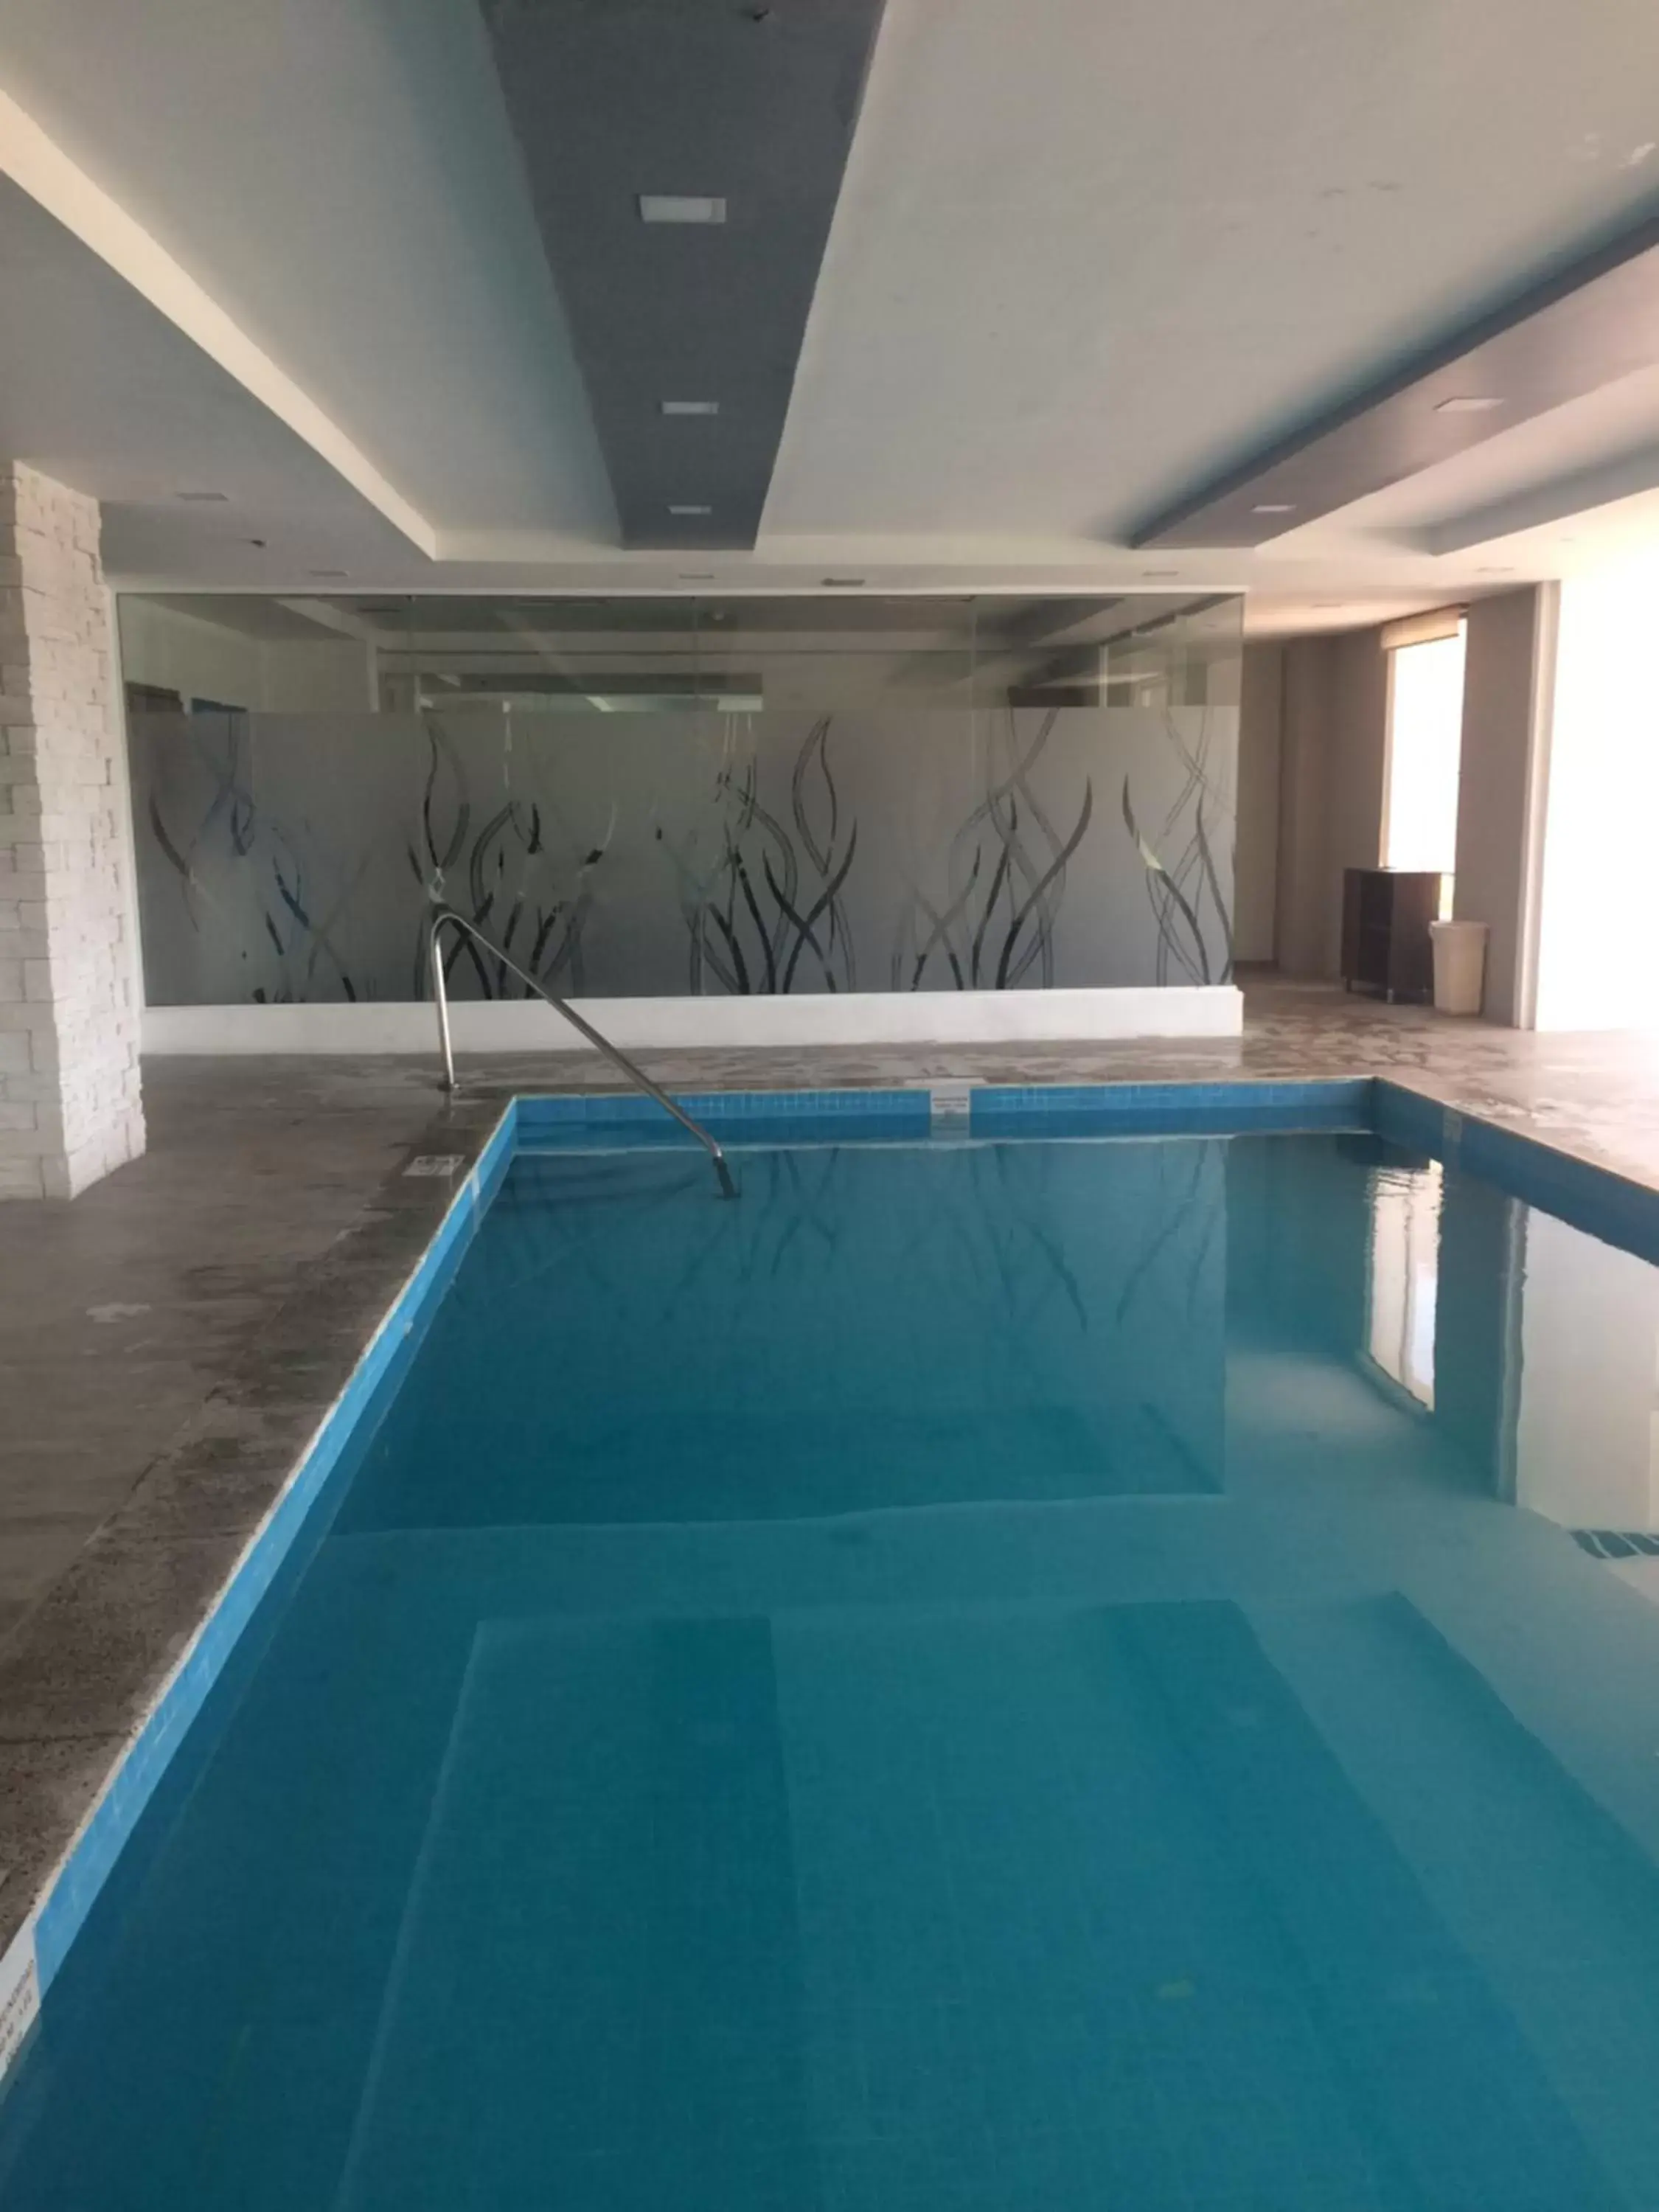 Swimming Pool in Krystal Urban Ciudad Juarez by US Consulate